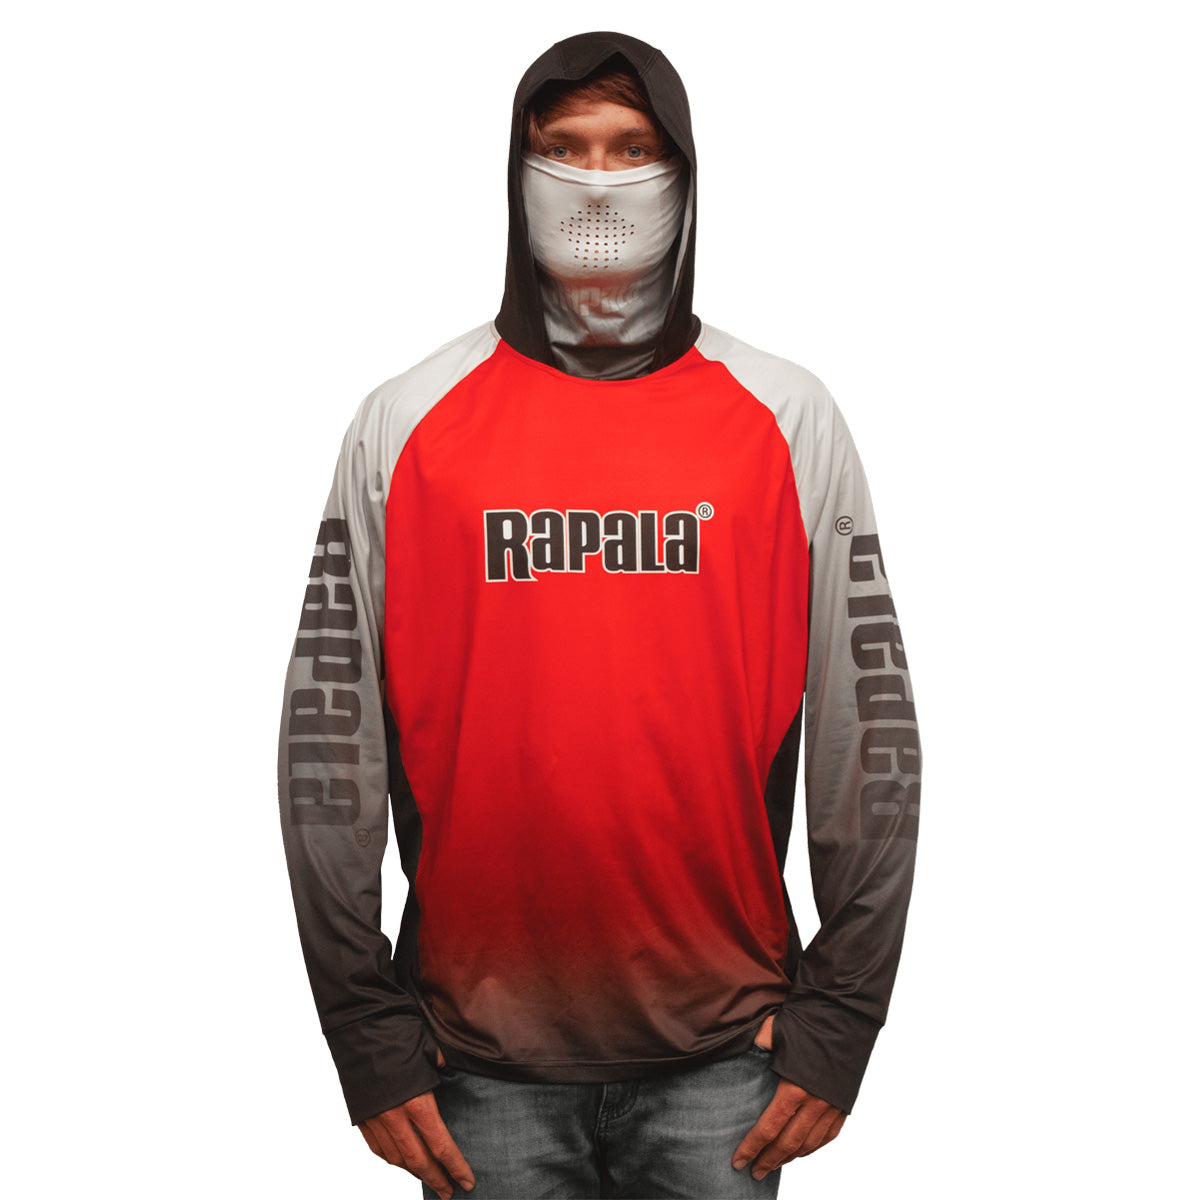 Rapala Hooded Performance Fishing Jersey Shirt